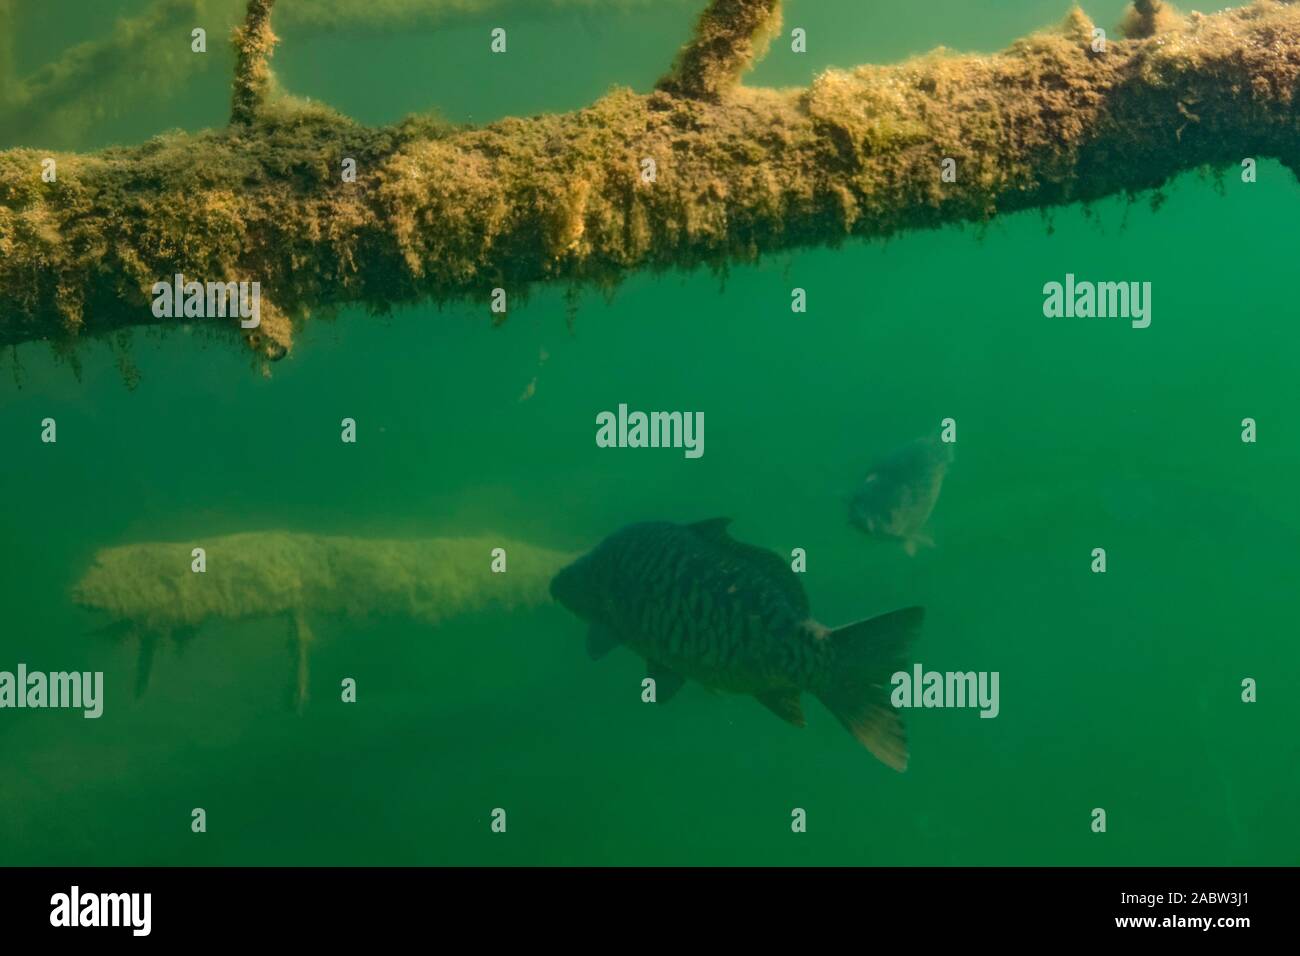 Underwater photo of the common carp or European carp (Cyprinus carpio) in Soderica Lake, Croatia Stock Photo